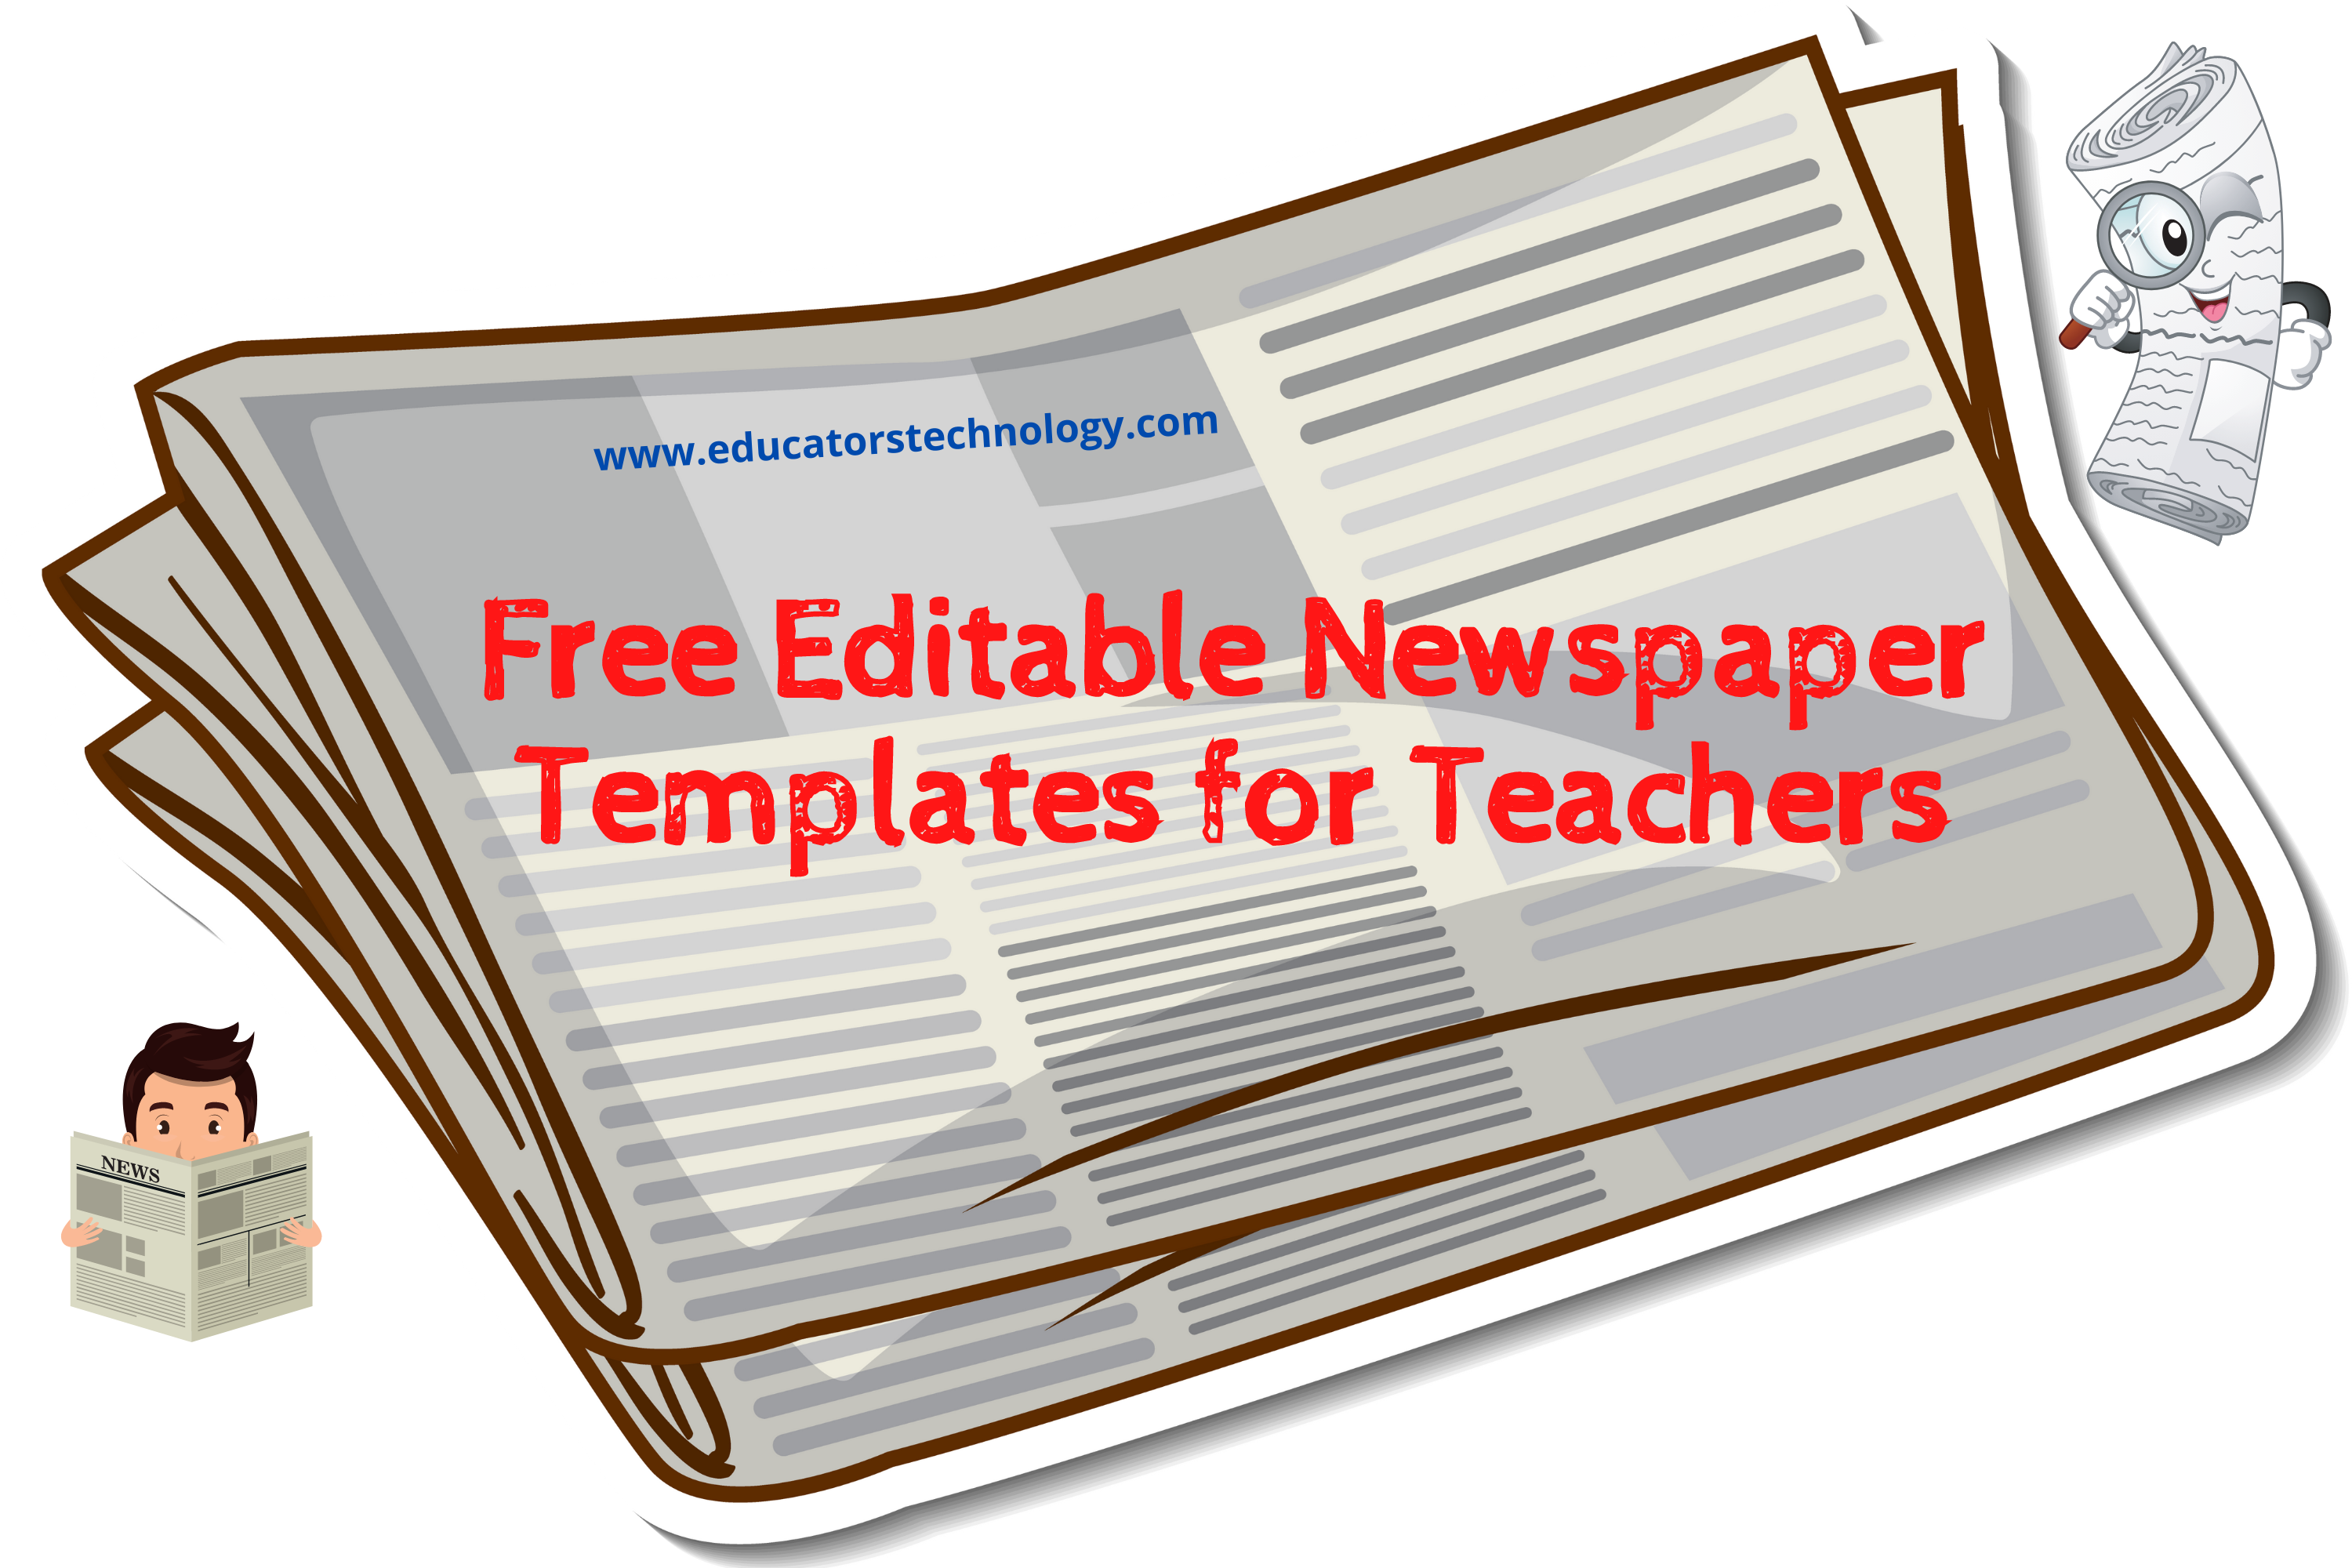 Free Editable Newspaper Templates